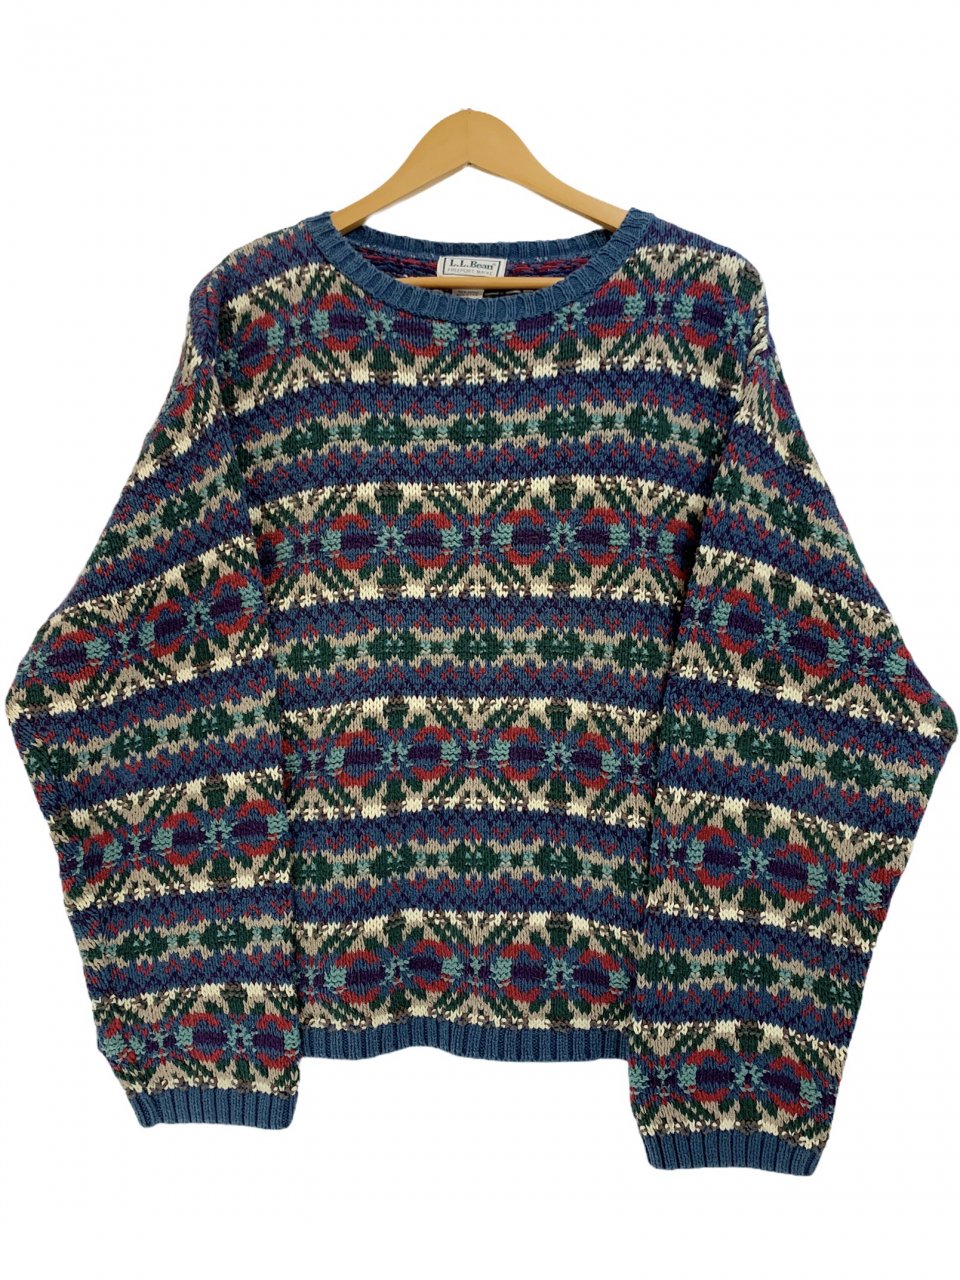 USA製 80s L.L.Bean Nordic Pattern Cotton Knit マルチカラー XL